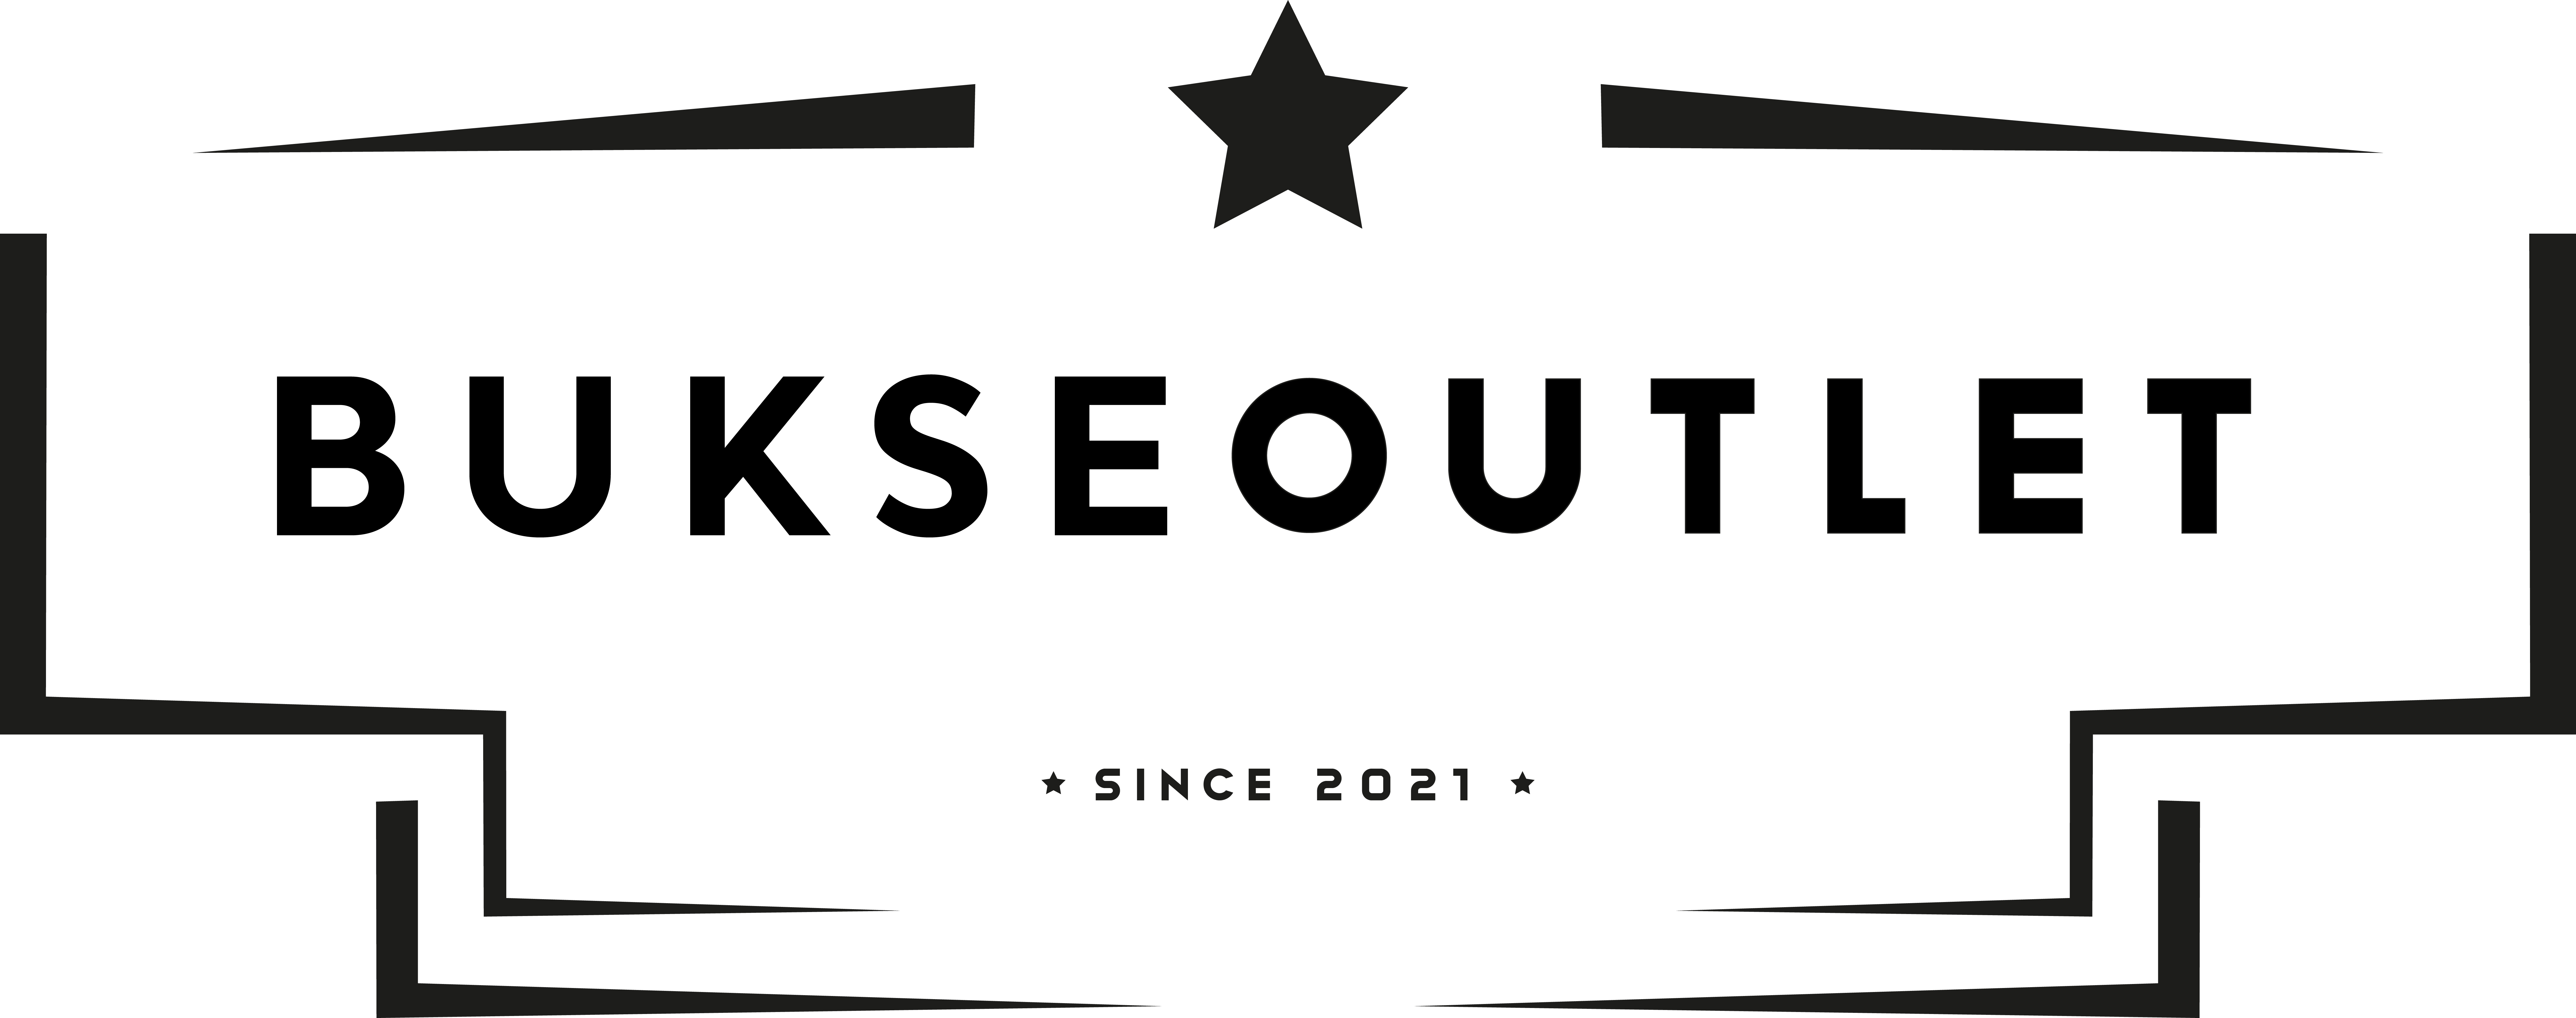 Bukseoutlet logo ORIGINAL 1